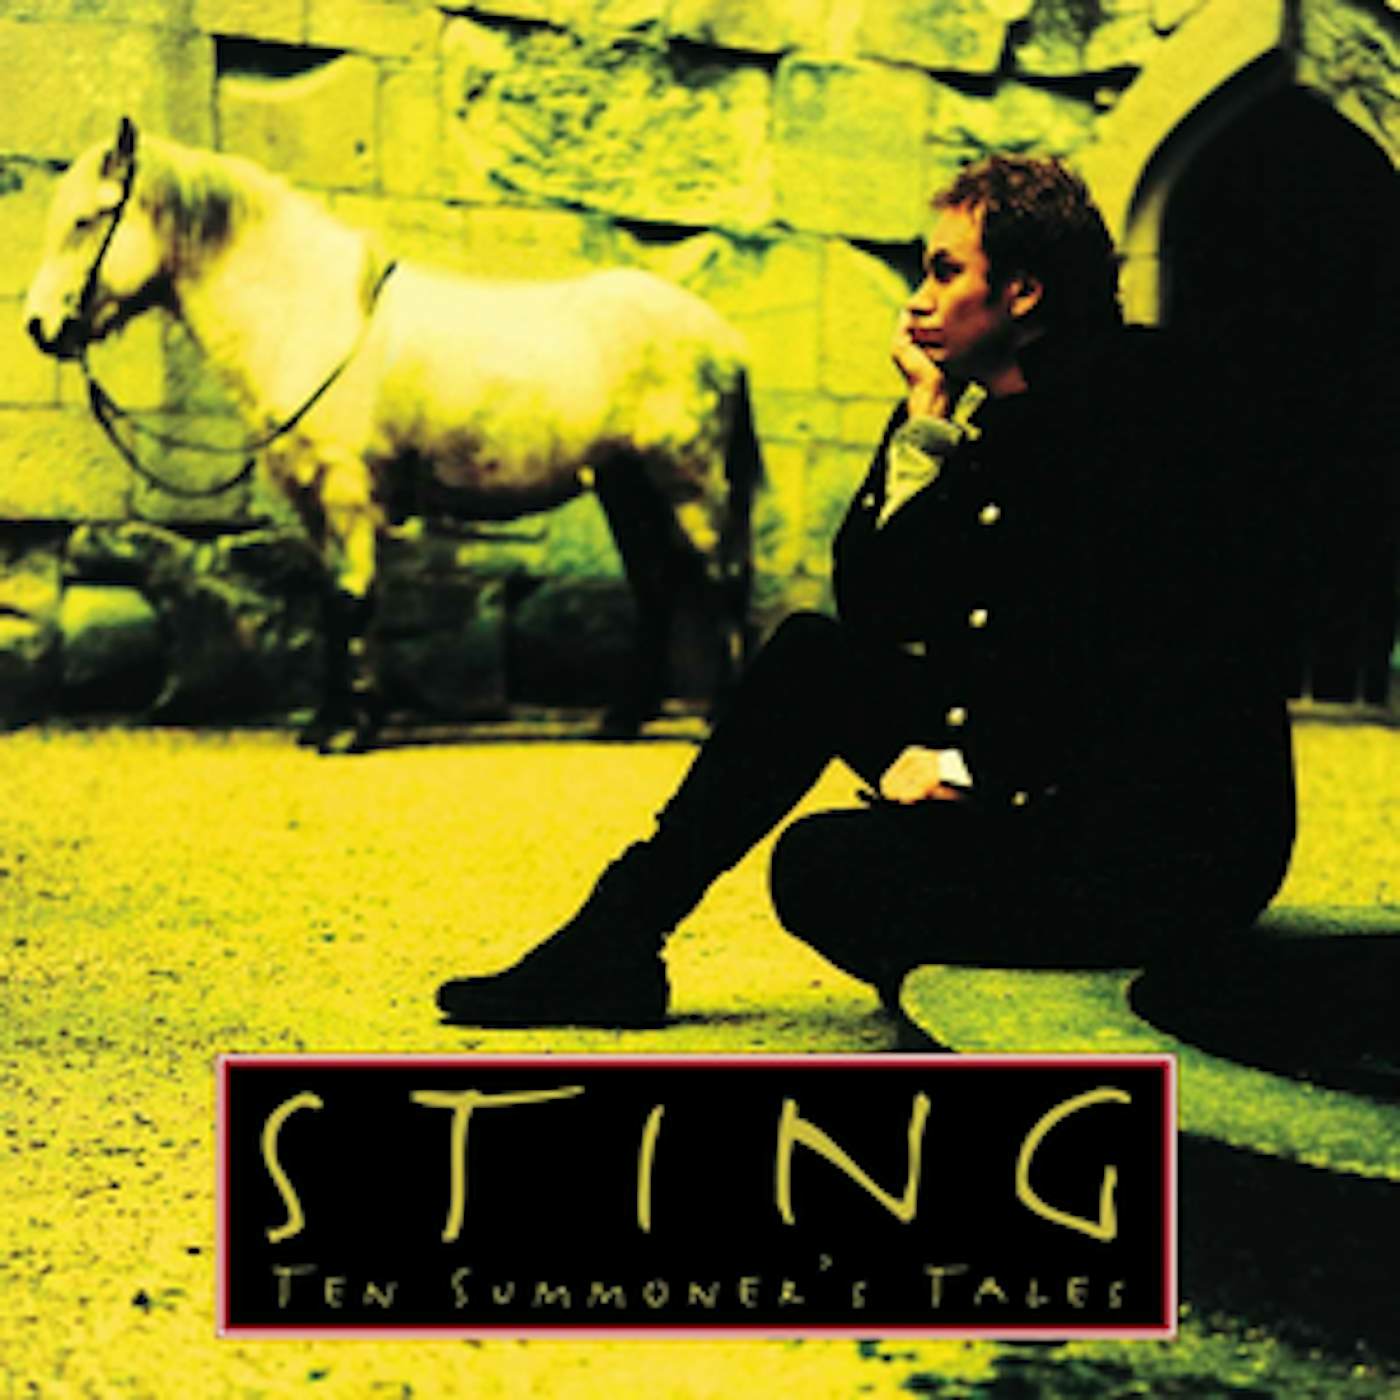 Sting - Ten Summoners Tales (Vinyl)